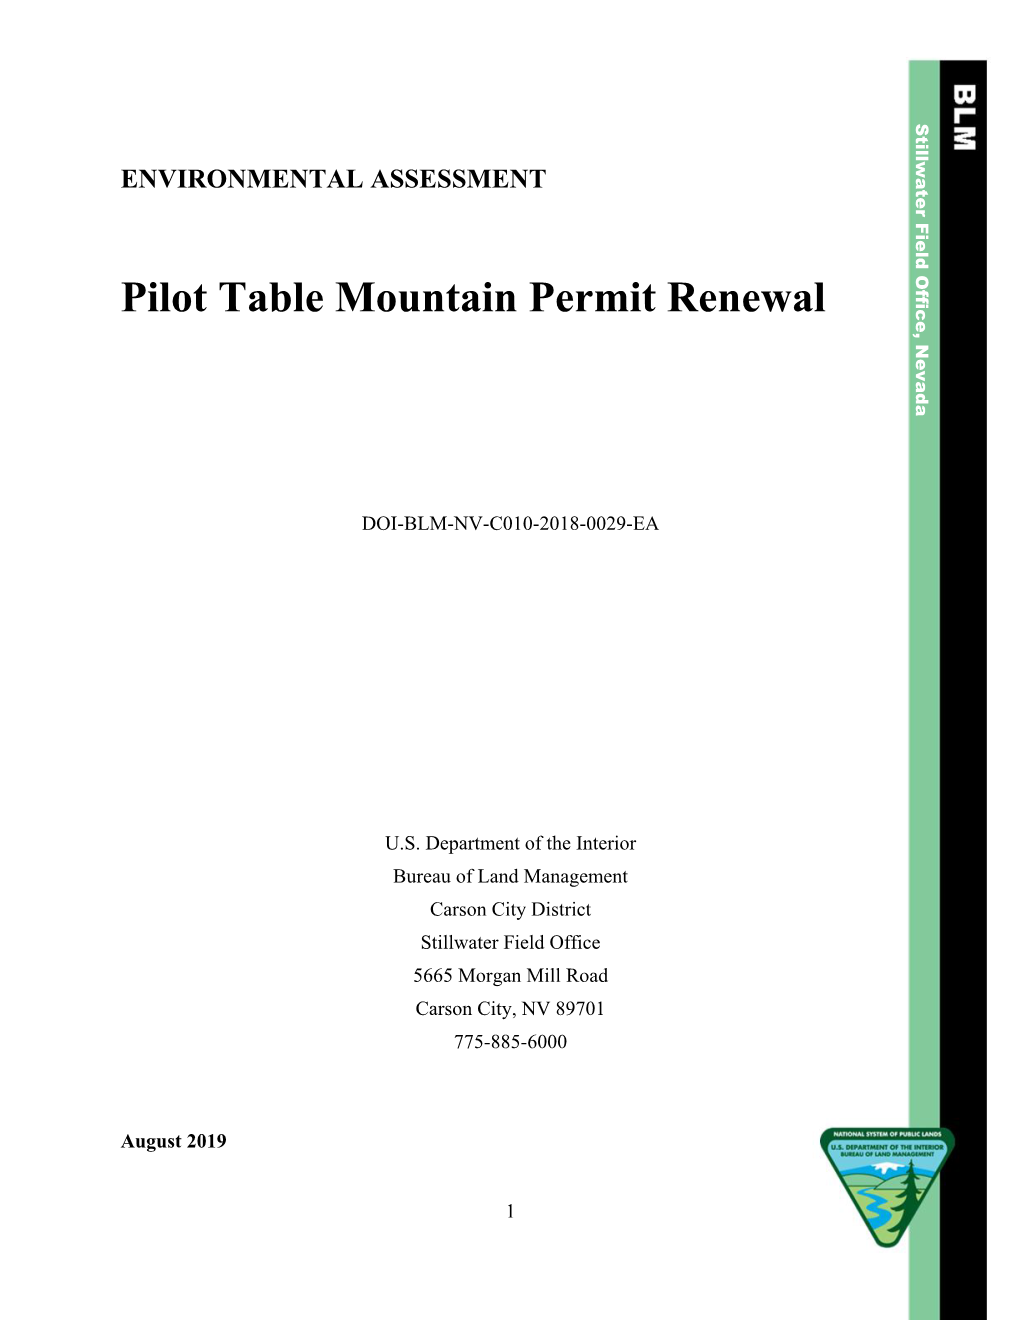 Pilot Table Mountain Permit Renewal Environmental Assessment